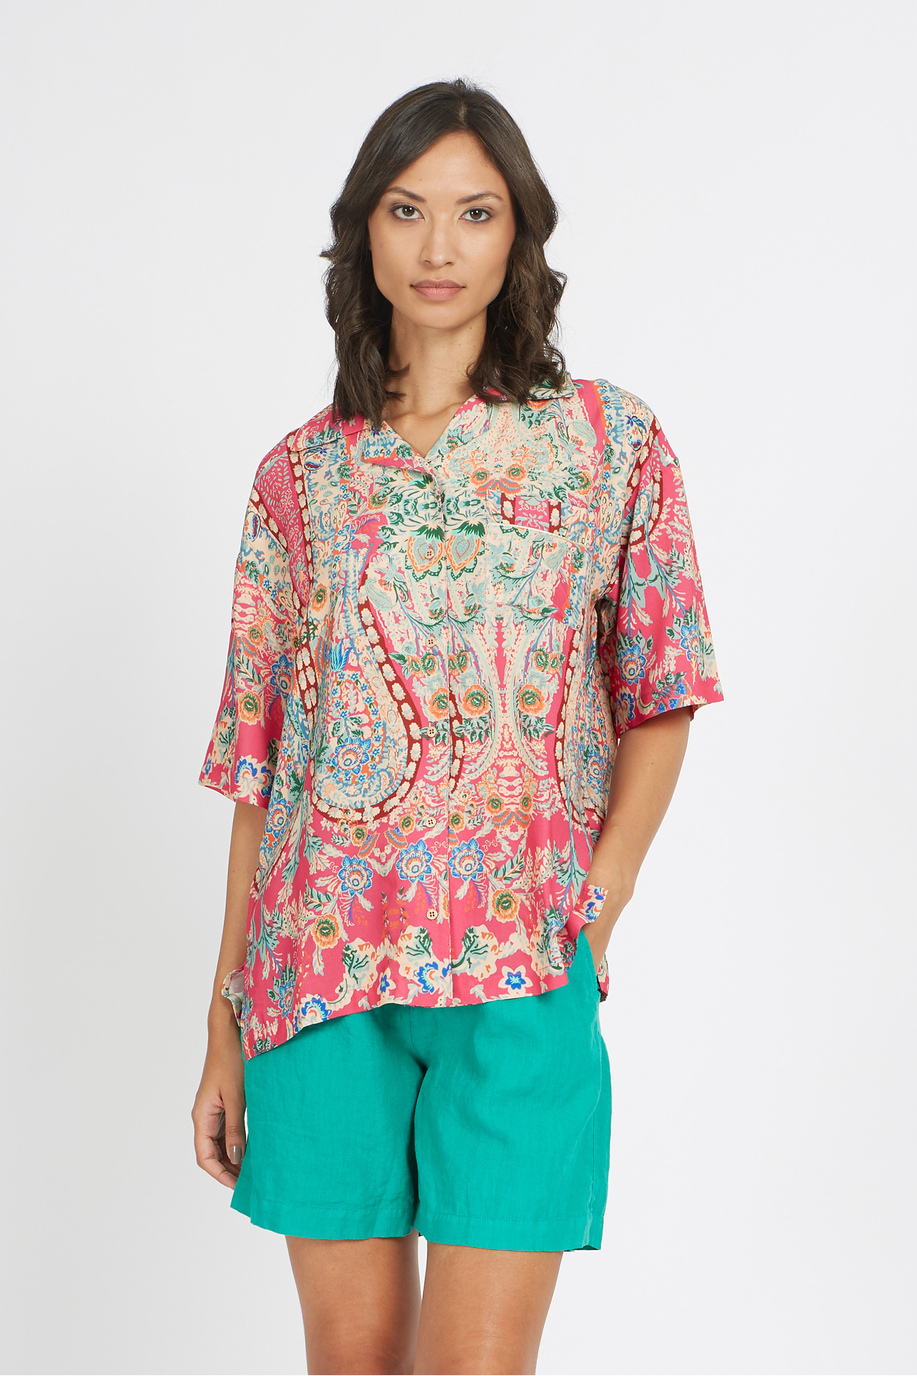 Damen-Hemd mit Print und normaler Passform- Vanetta - Hemden | La Martina - Official Online Shop